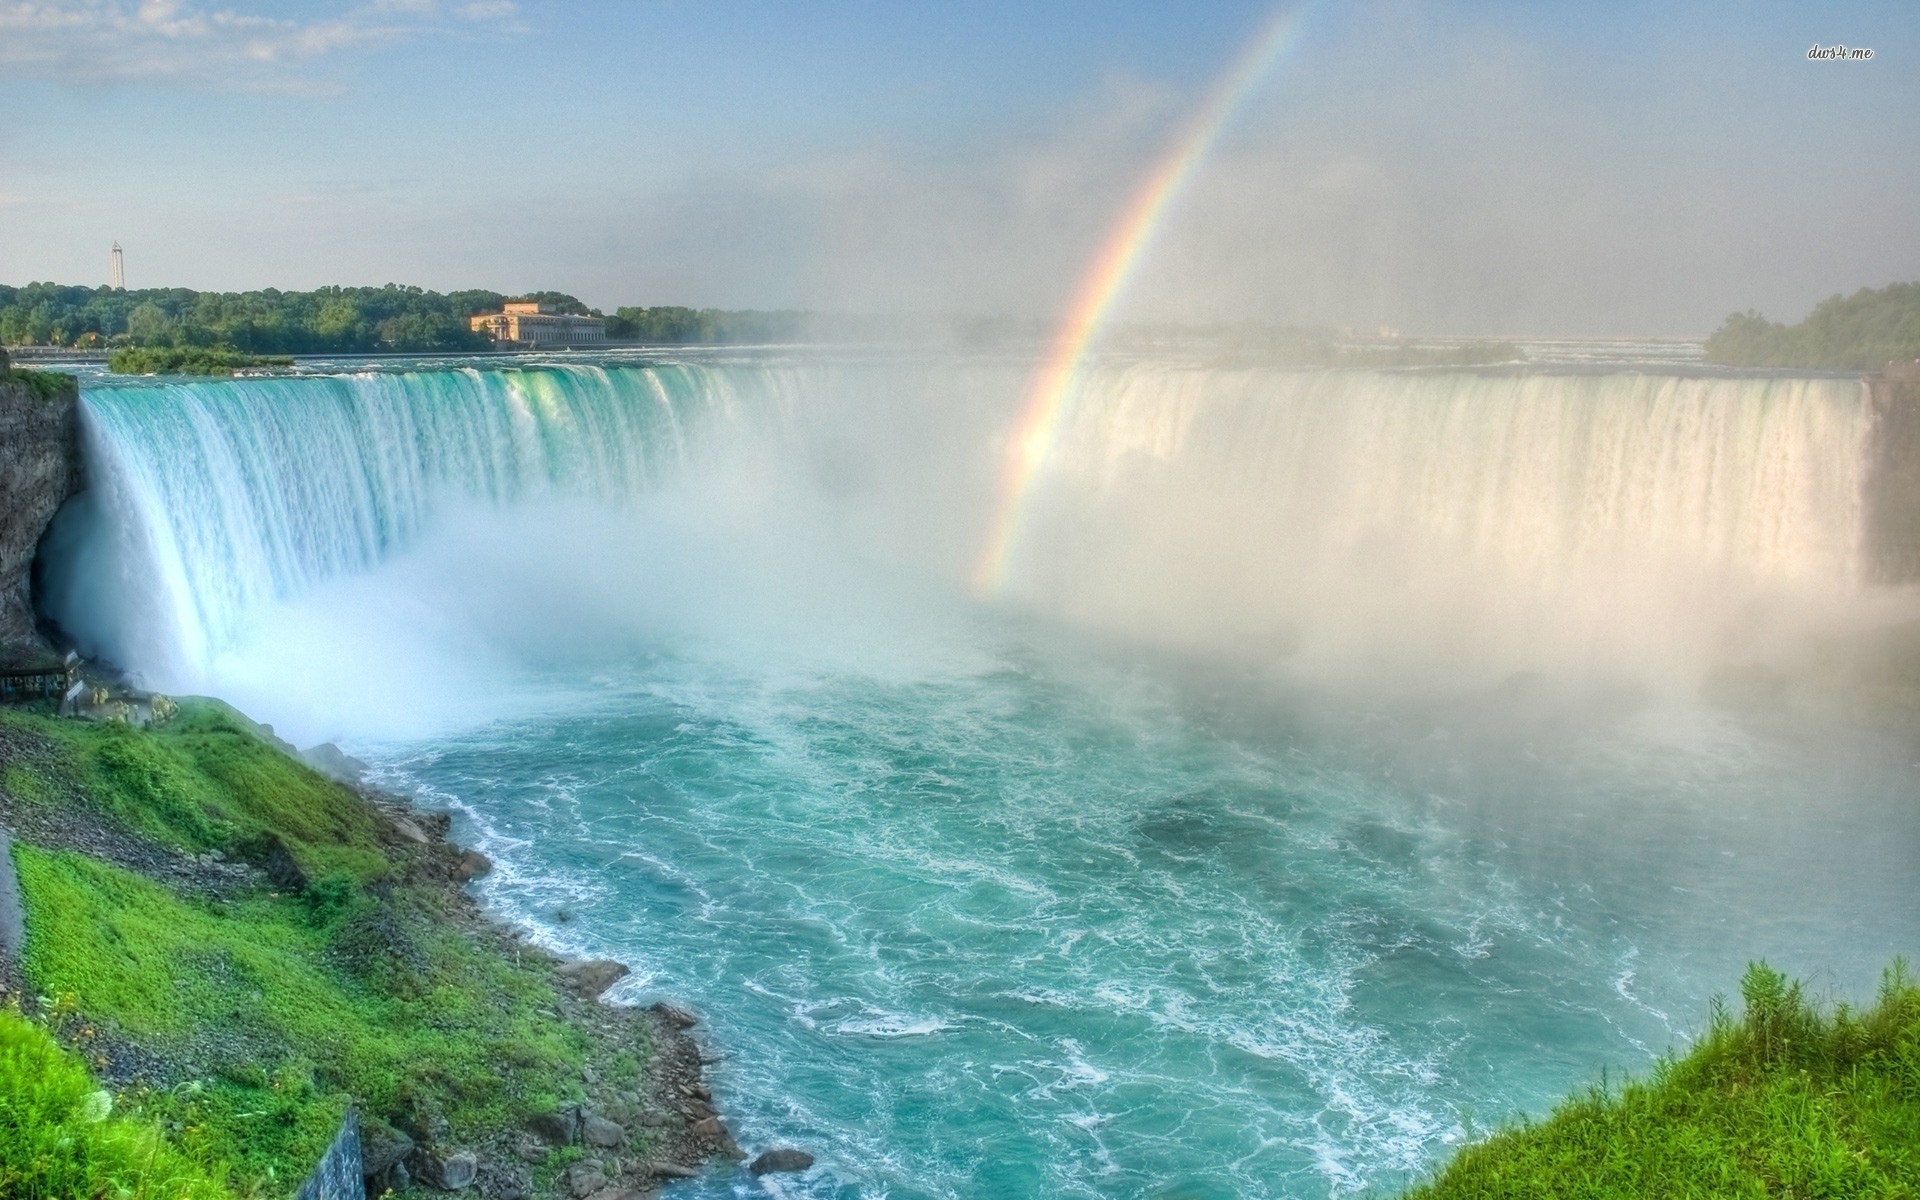 Niagara Falls, Ontario | natural beauty | Pinterest | Niagara falls ...